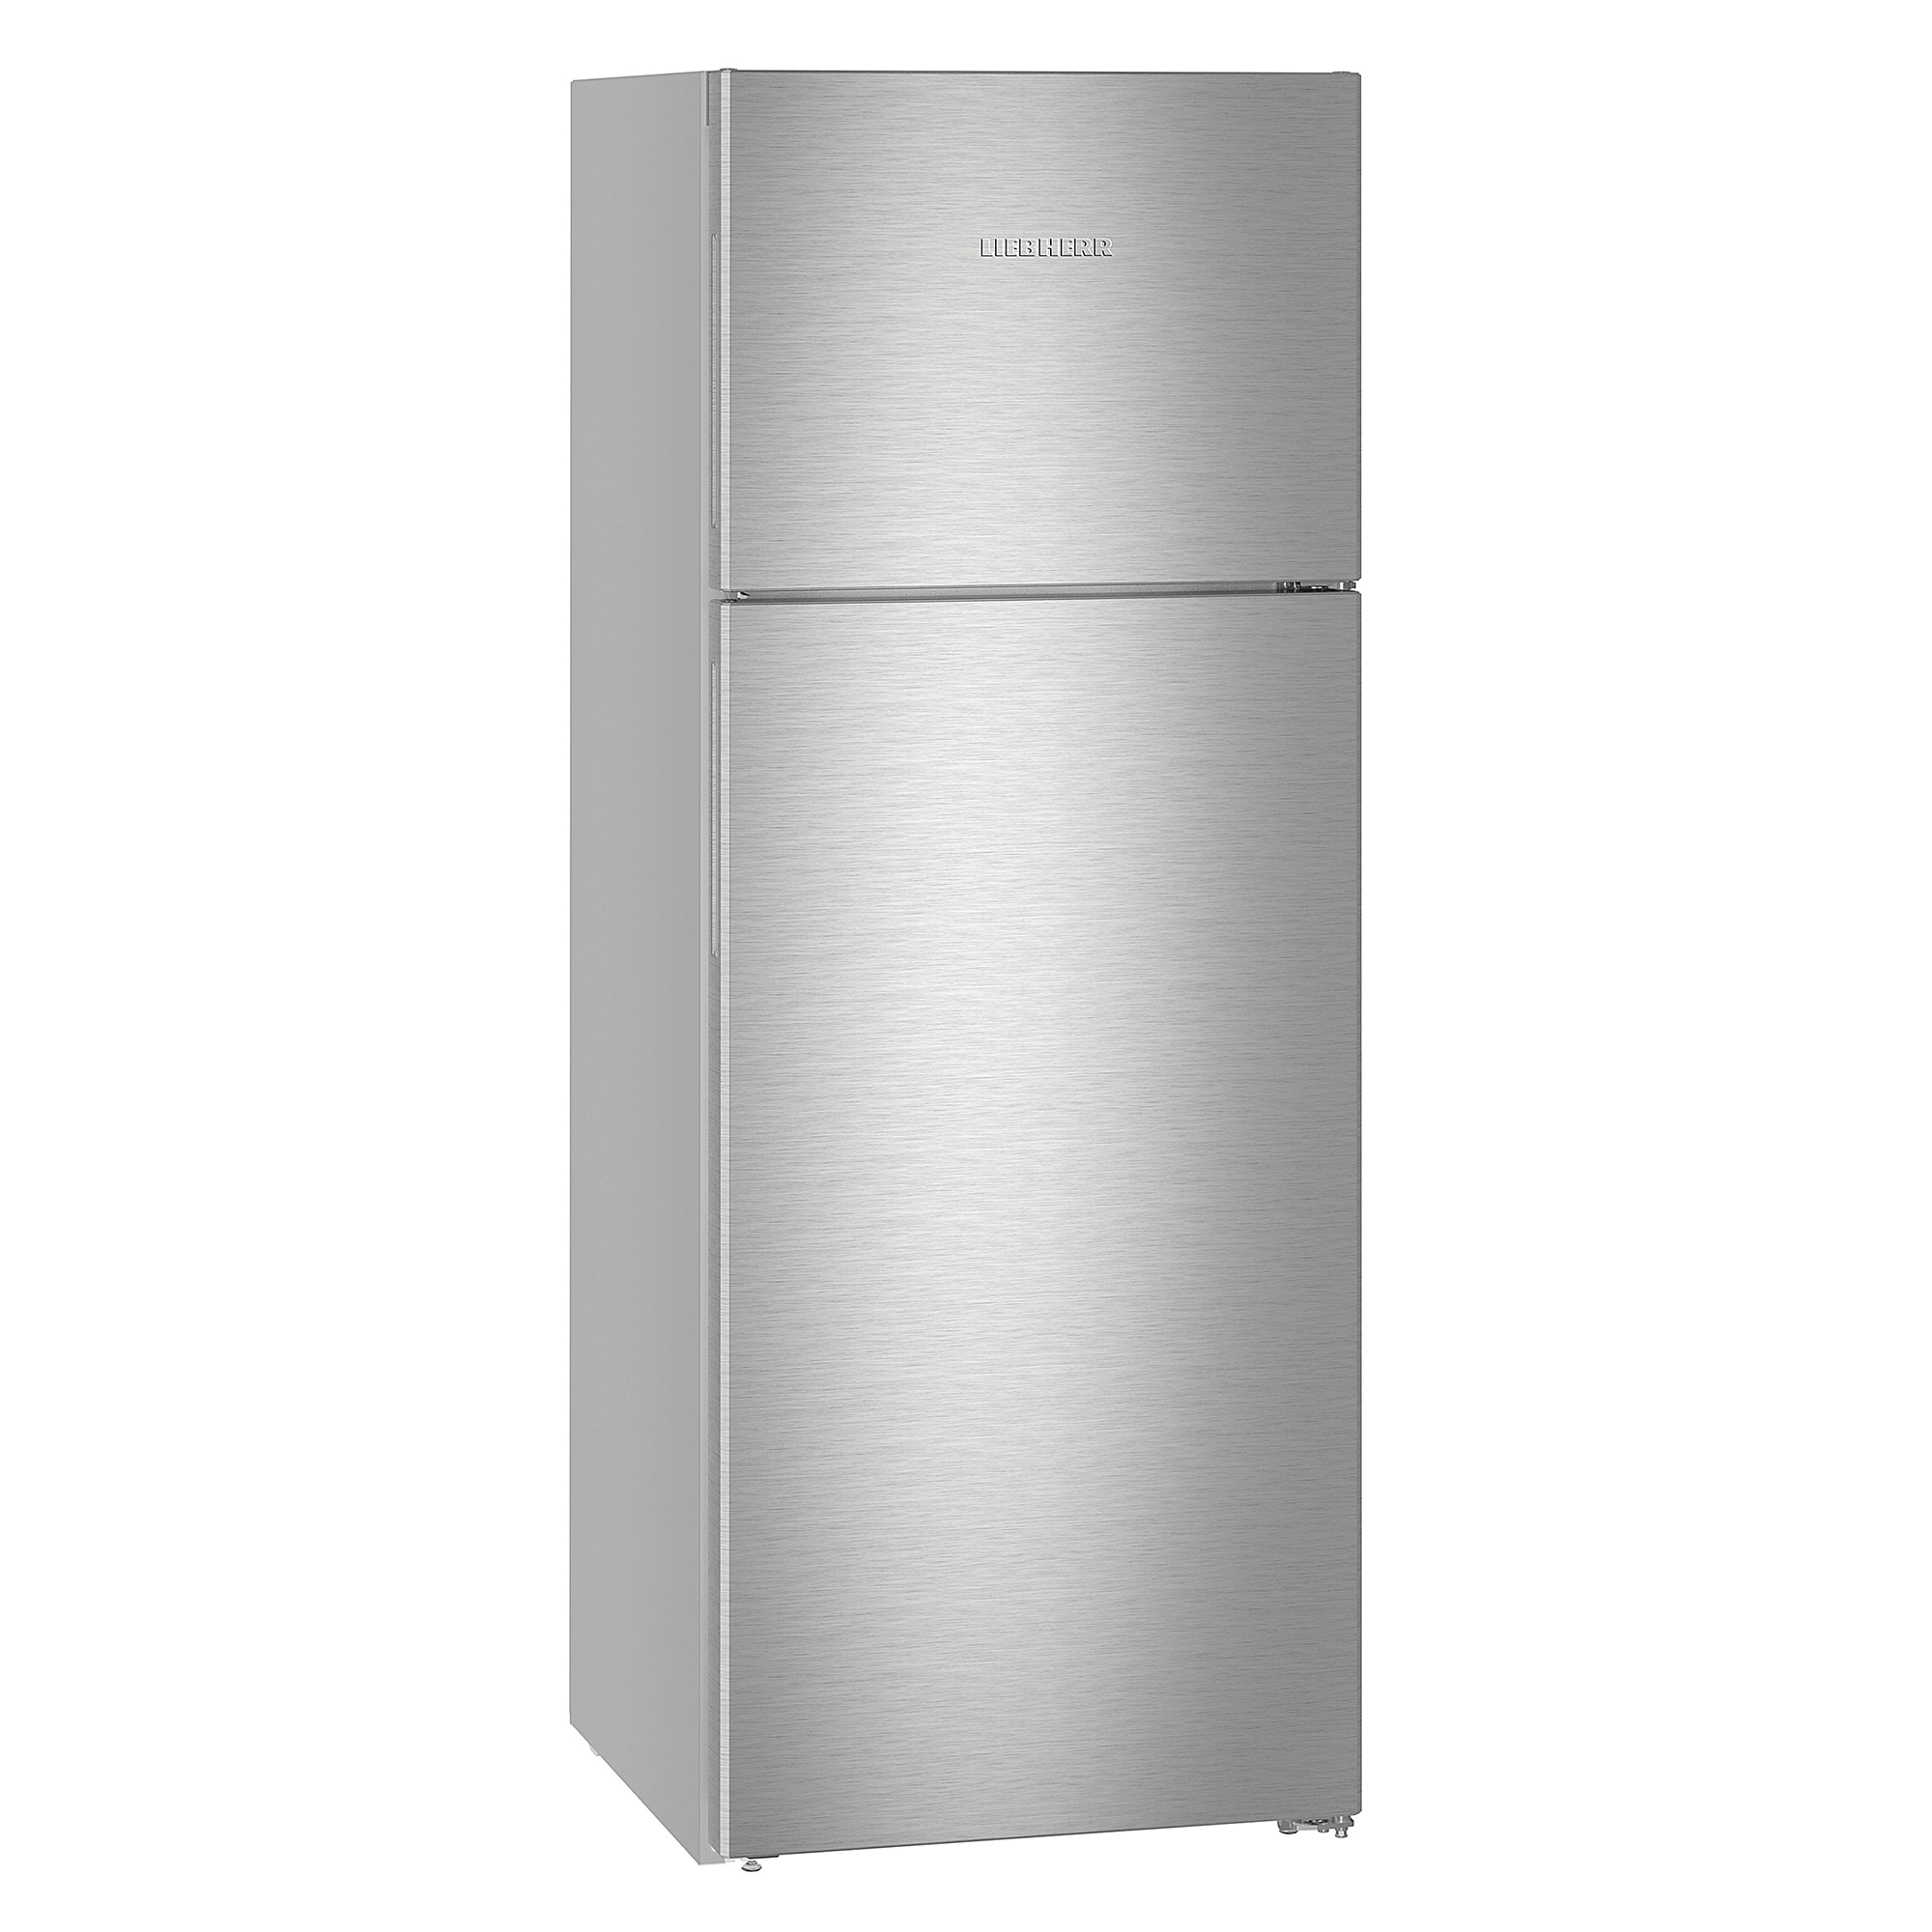 Хладилник Liebherr CTN 5215 с обем от 418 л.